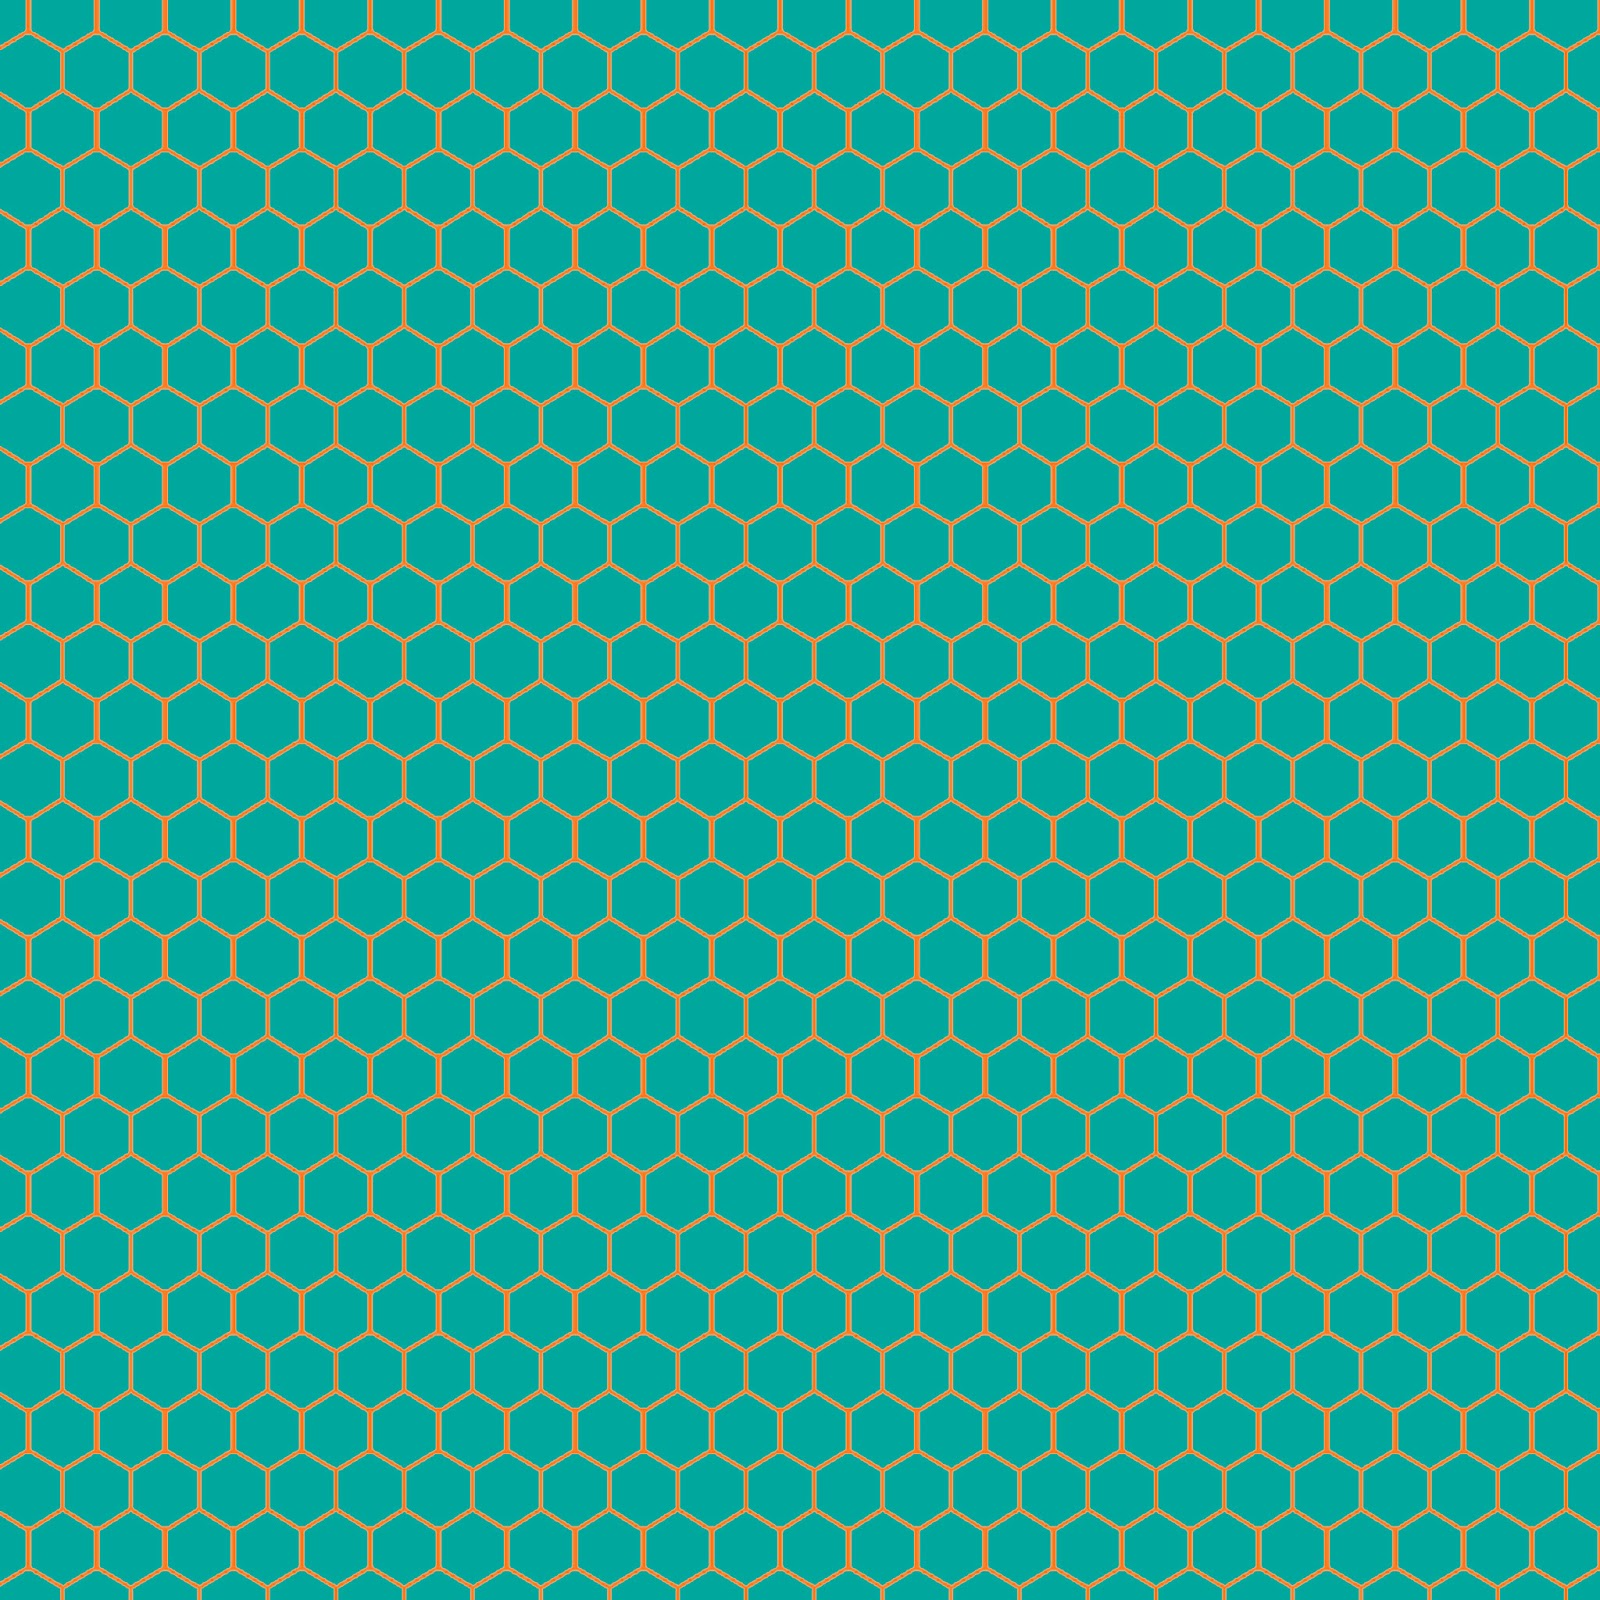  Hexagon Honeycomb FREEBIE background pattern of Awesomeness